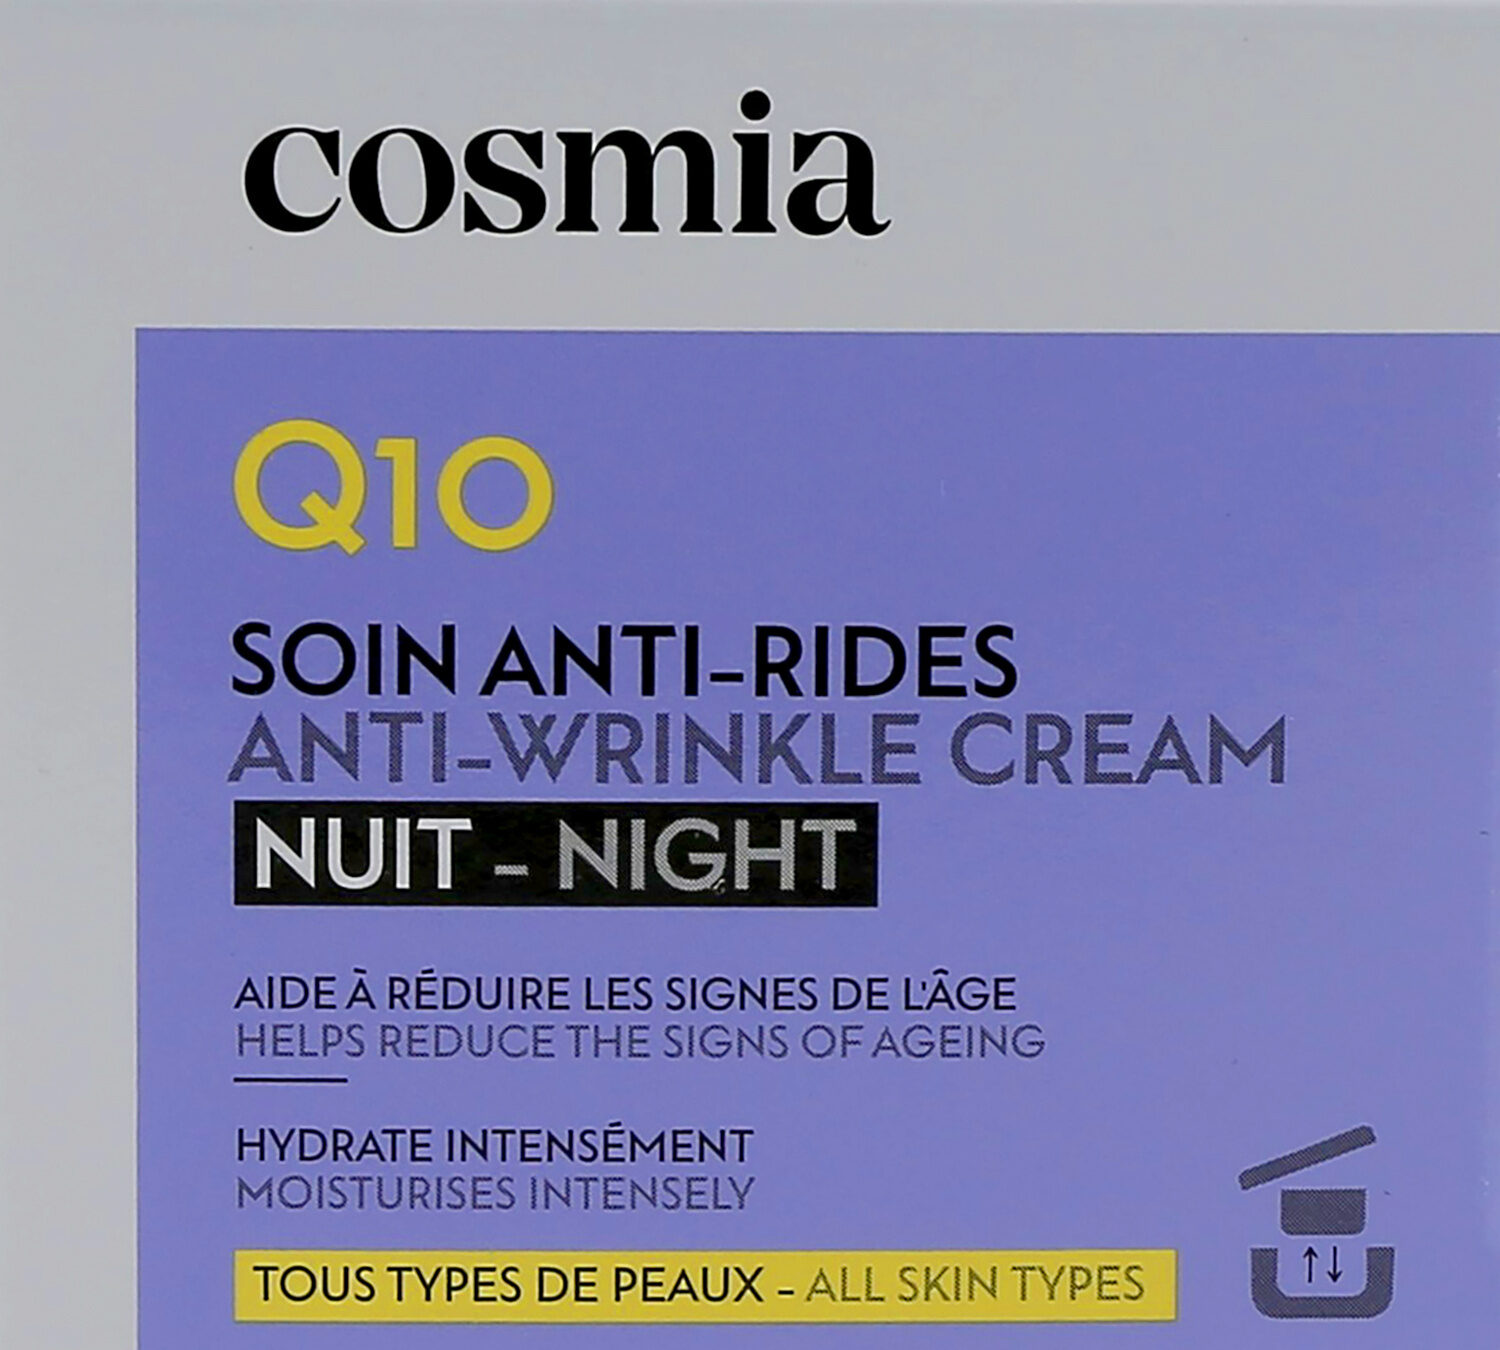 Cosmia creme nuit - anti ride - q10 50ml - Produkt - fr